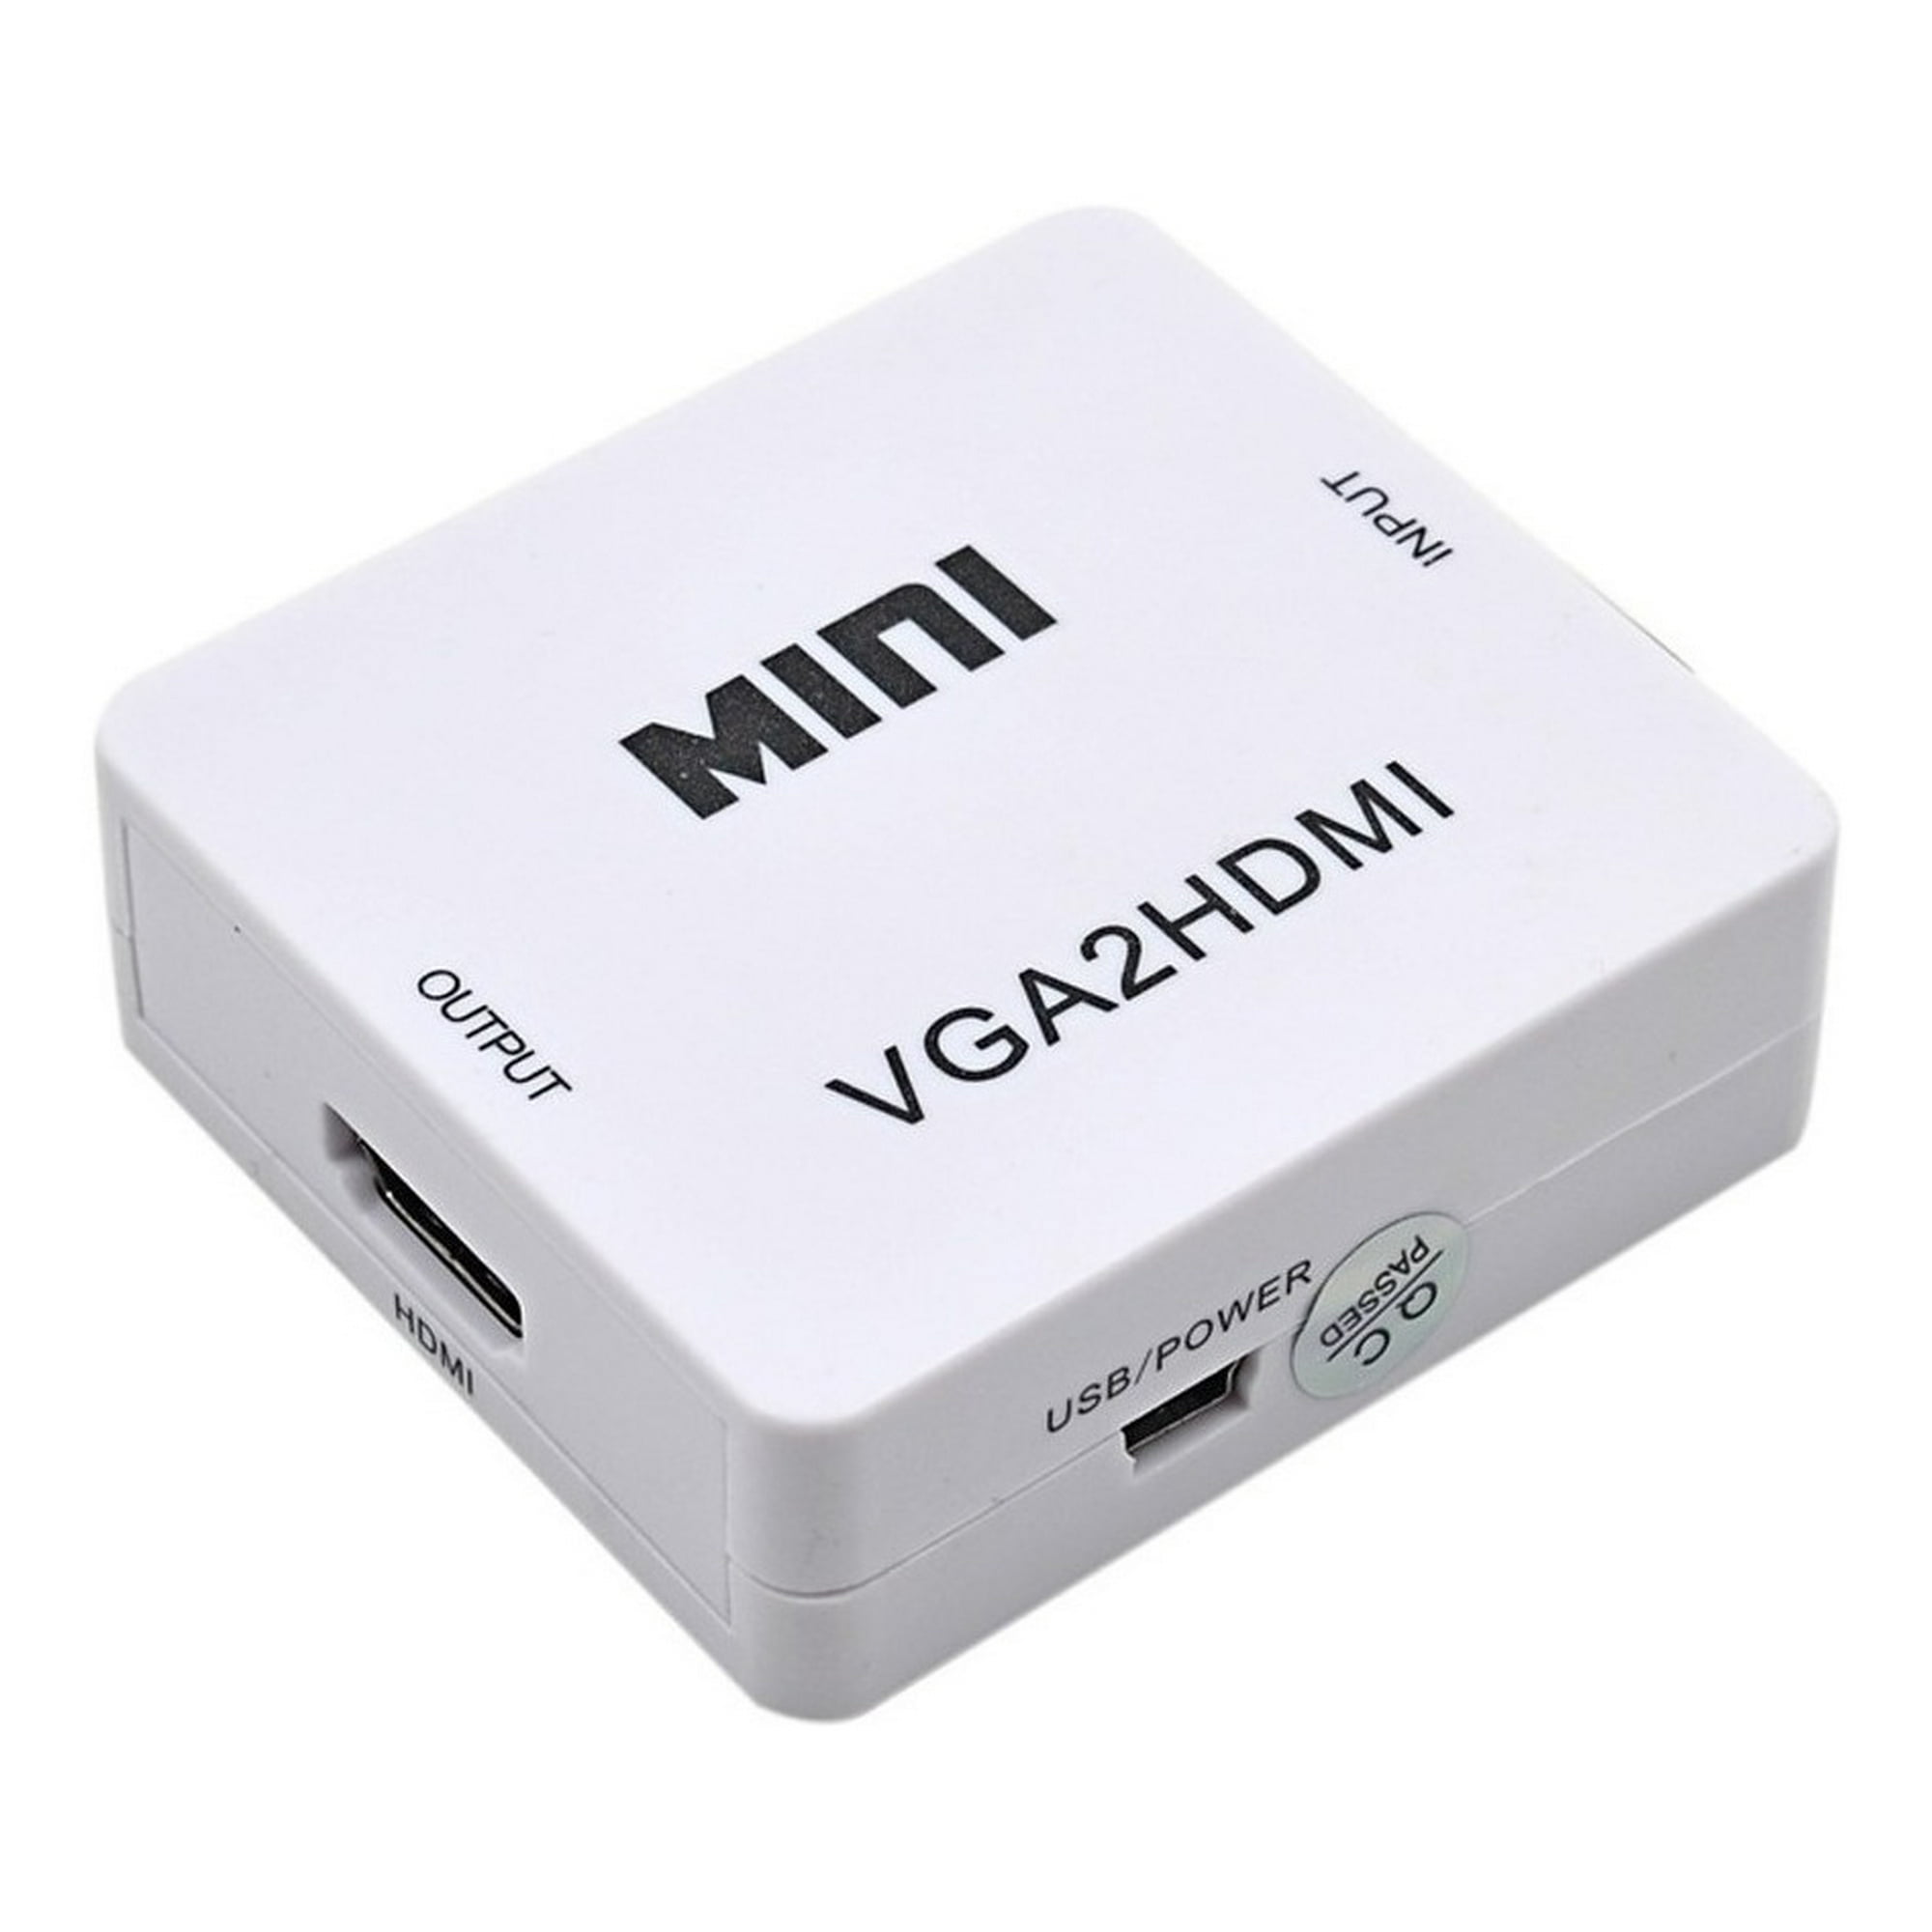 Mitzu® Convertidor VGA a HDMI con salida de audio